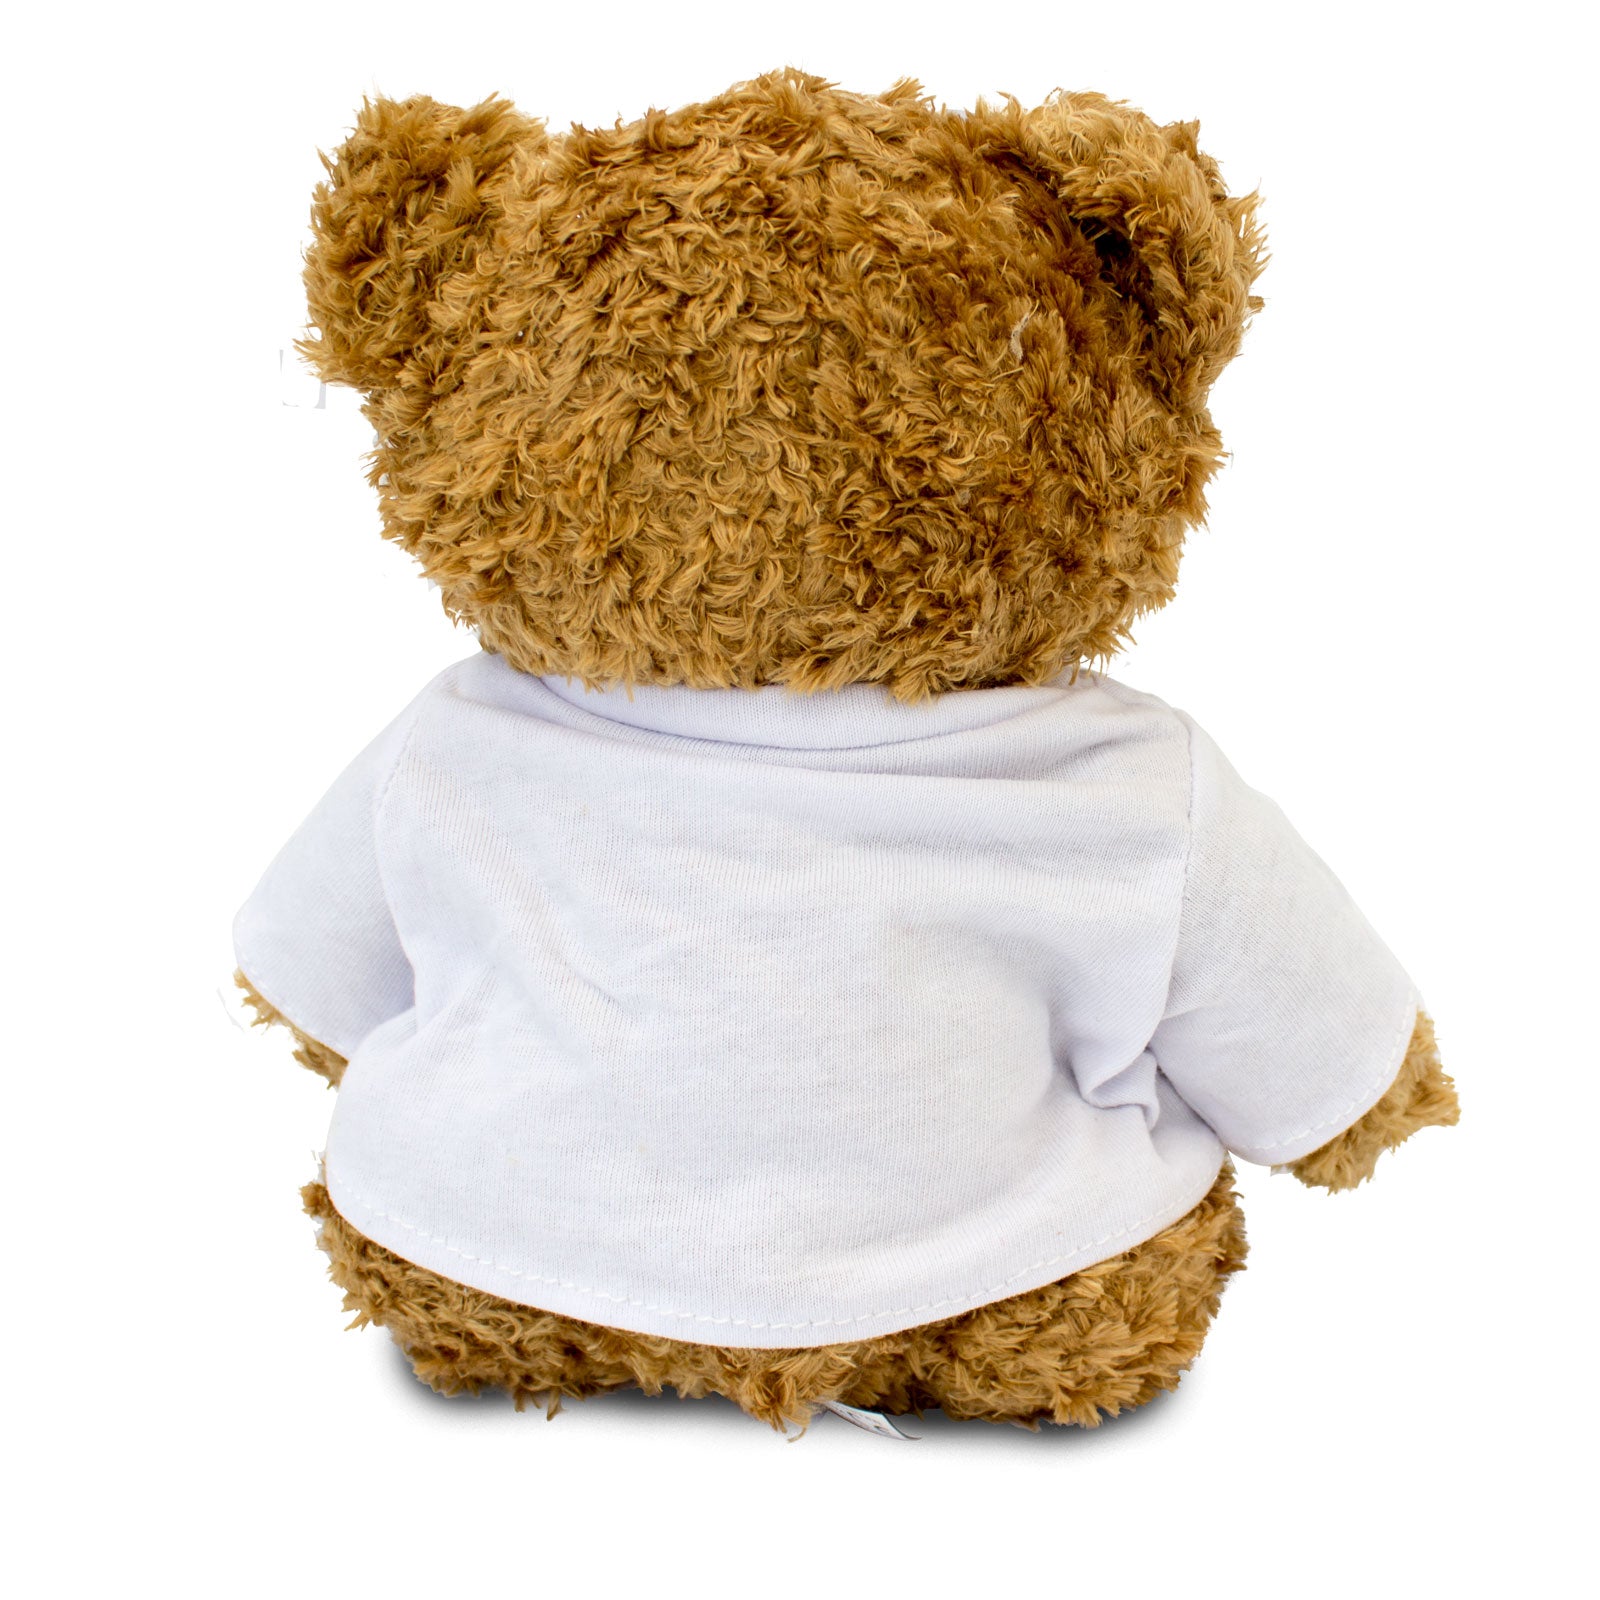 Get Well Soon Allen - Teddy Bear